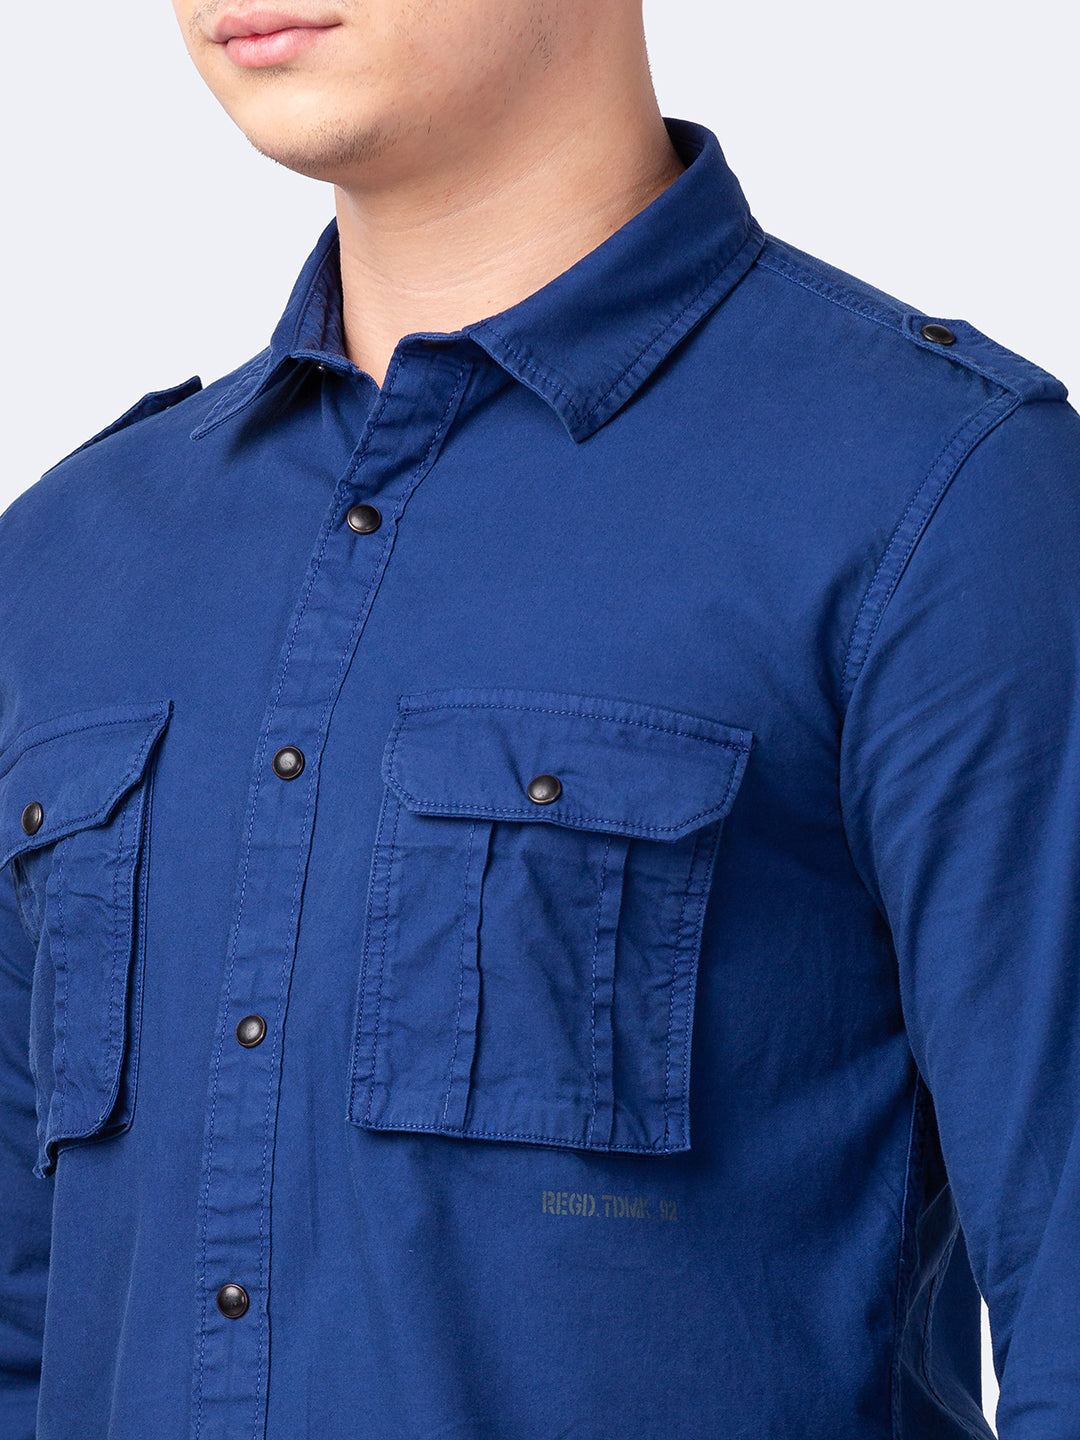 Spykar Men Indigo Blue Cotton Regular Slim Fit Plain Shirt